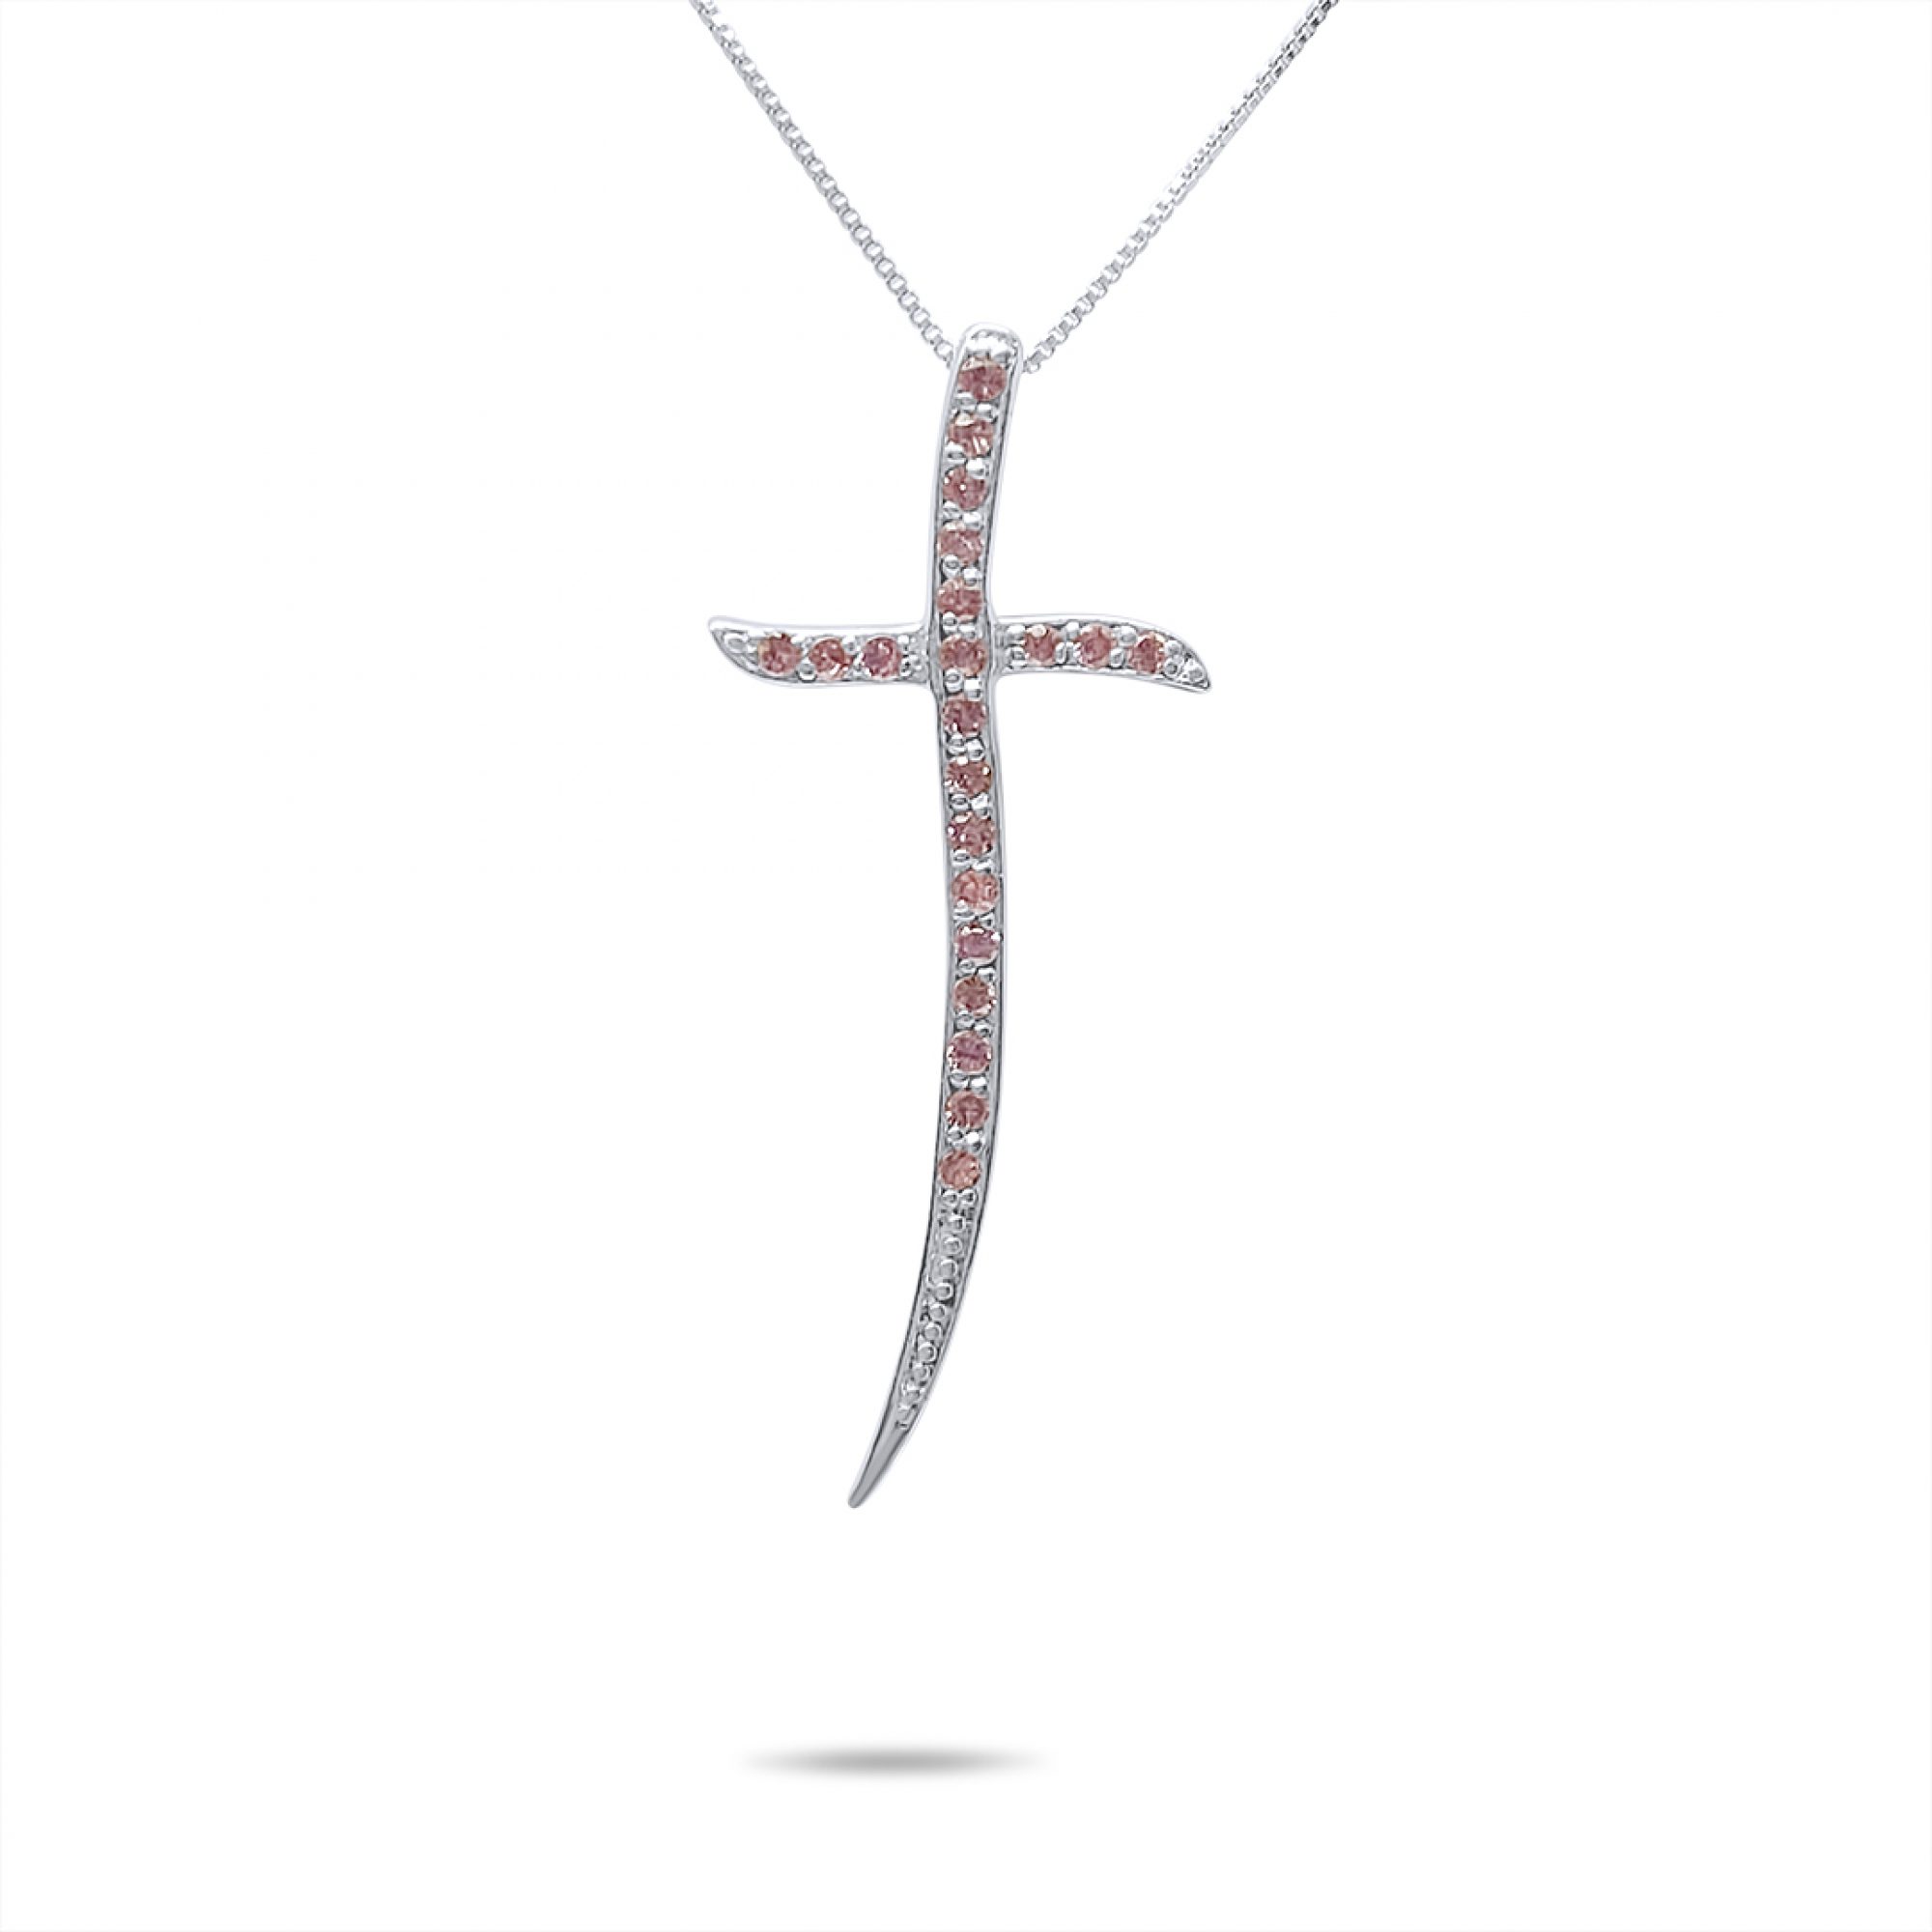 Cross necklace with pink quartz stones